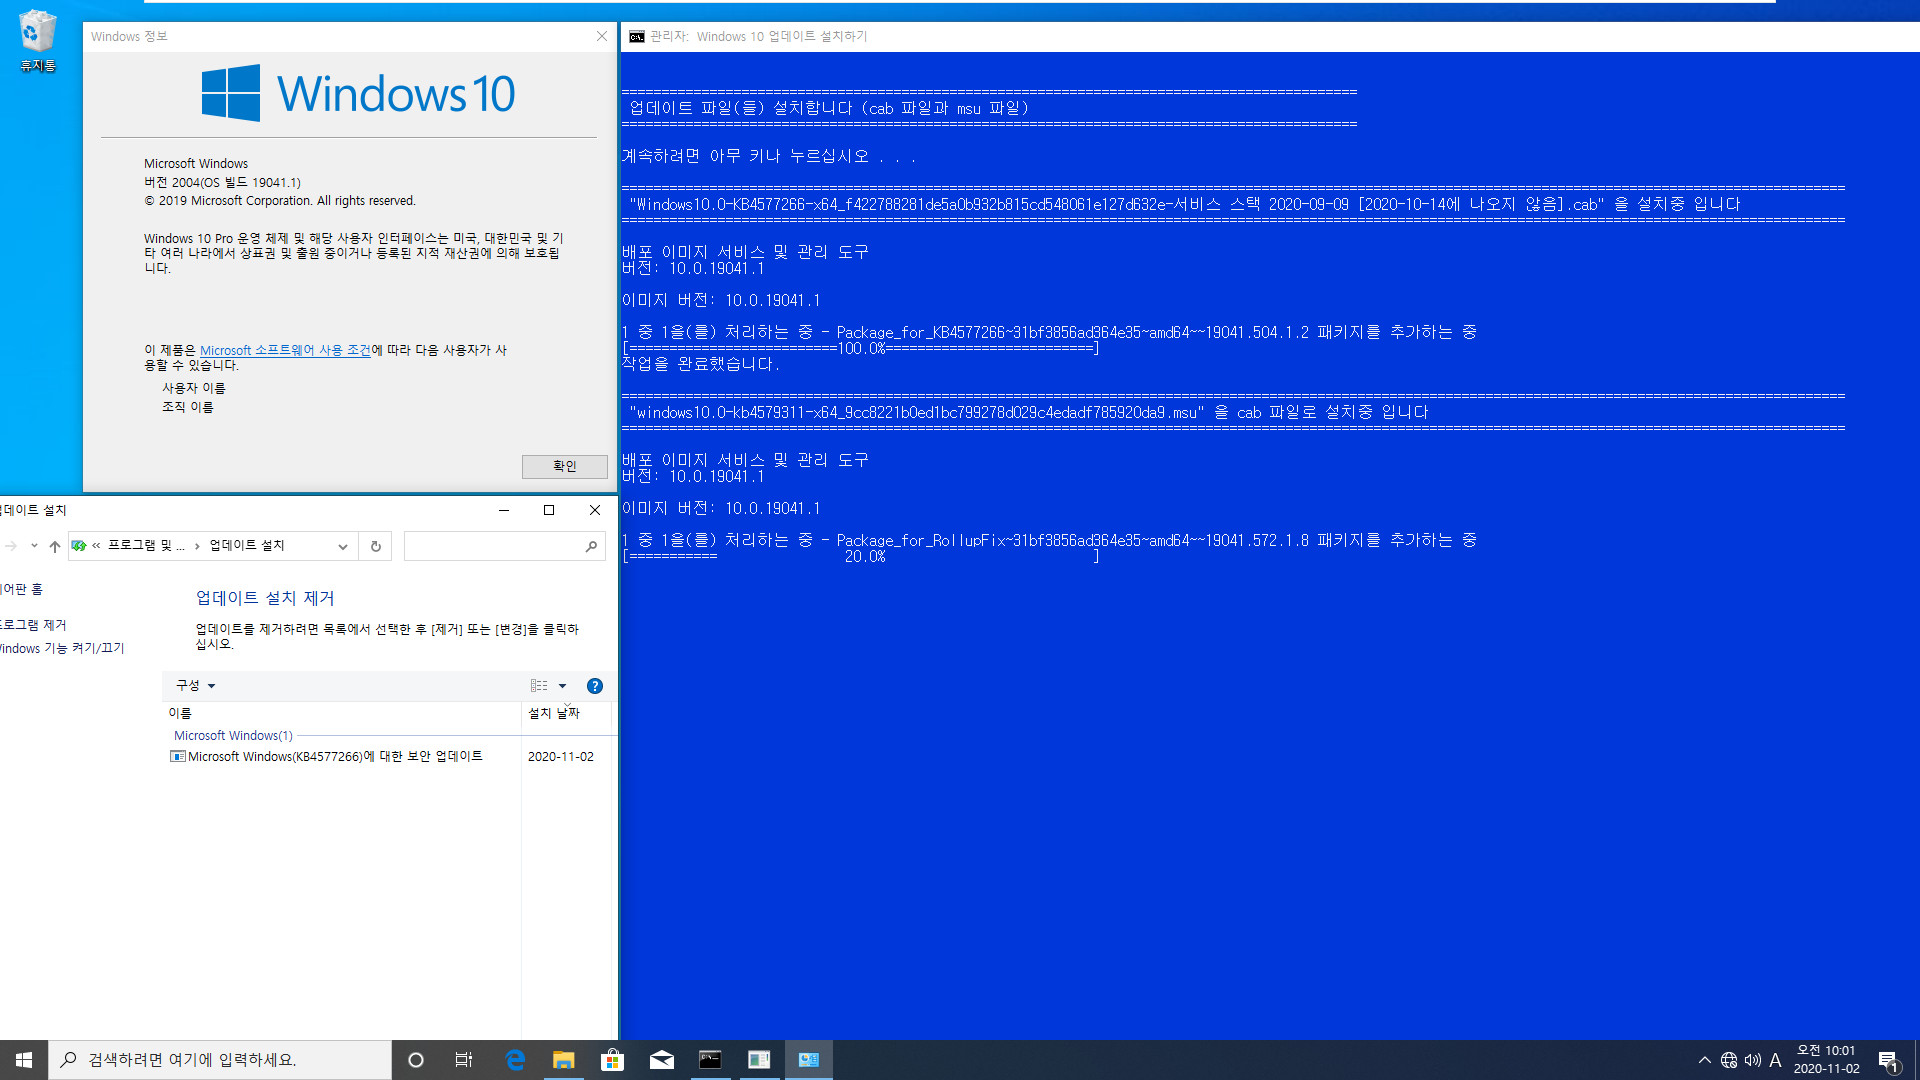 Windows 10 버전 20H2 기능 업데이트 KB4562830 폴더의 mum 파일들만 찾아서 설치하기.bat - 크로미엄 엣지 설치하지 않고 버전 20H2만 설치하기 테스트 - 뻘짓했네요 2020-11-02_100130.jpg